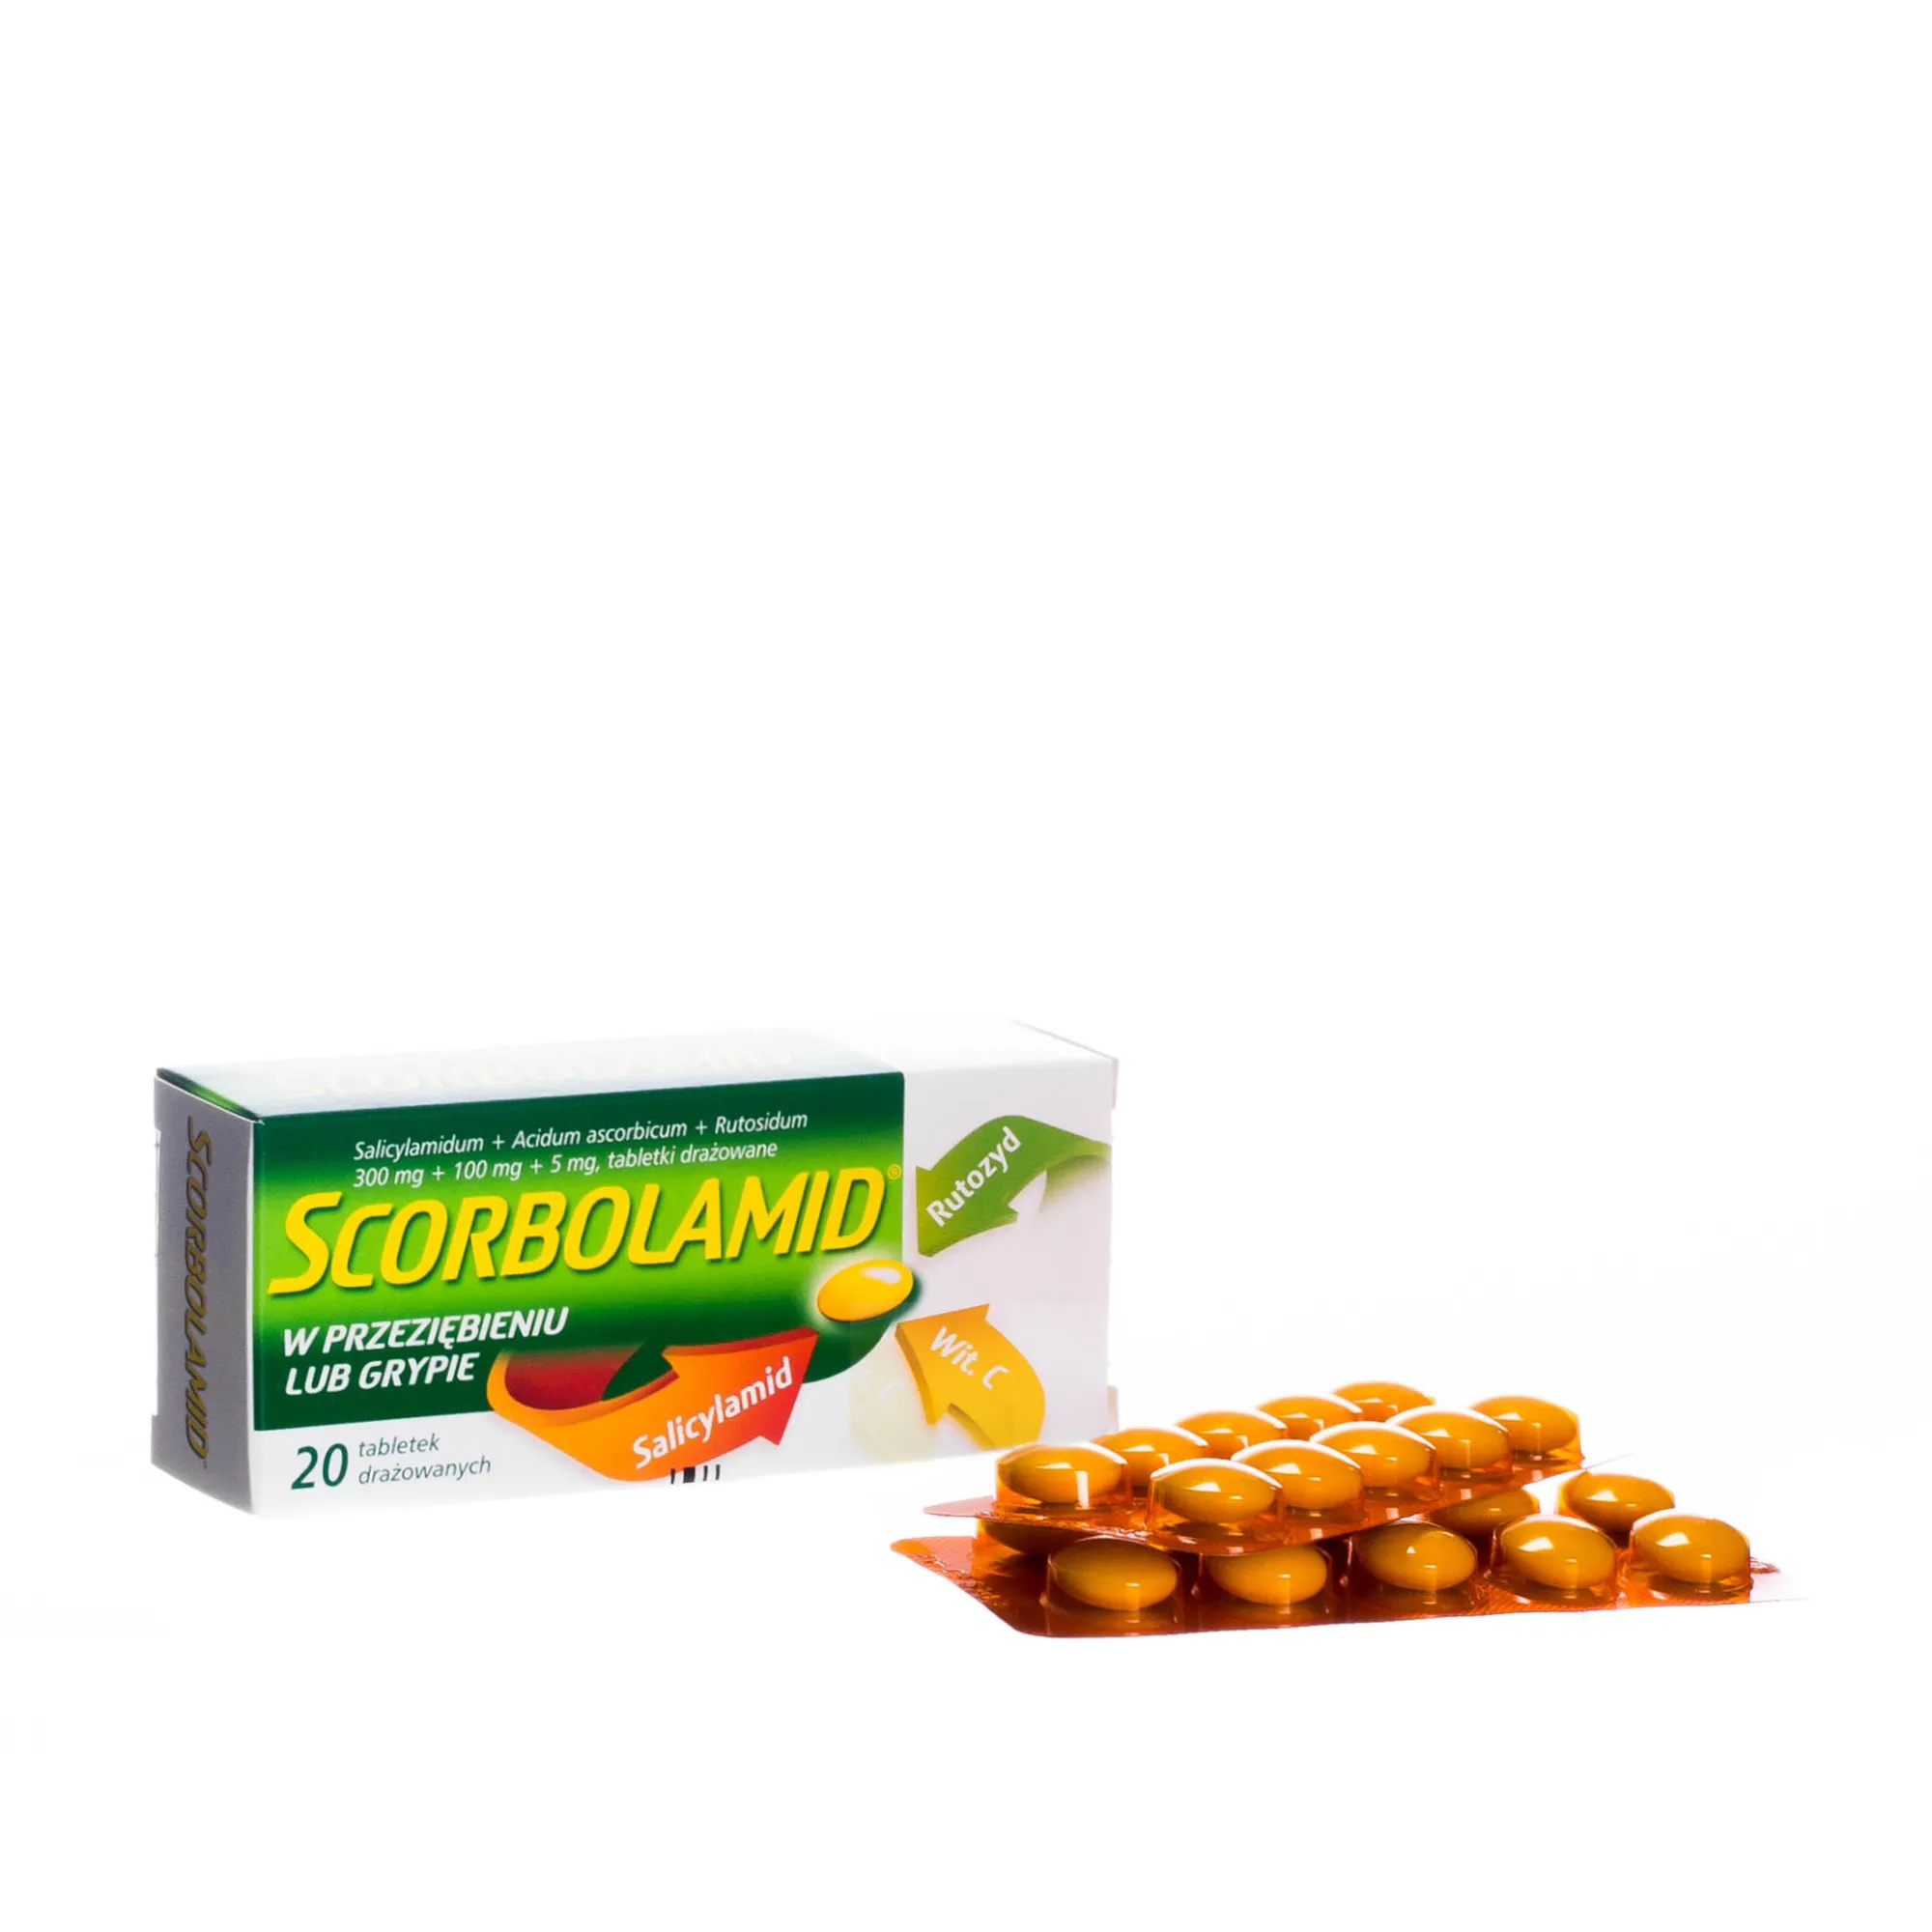 Scorbolamid Salicymidum + Acidum ascorbicum + Rutosidum ( 300 mg + 100 mg + 5 mg ), 20 tabletek drażowanych 